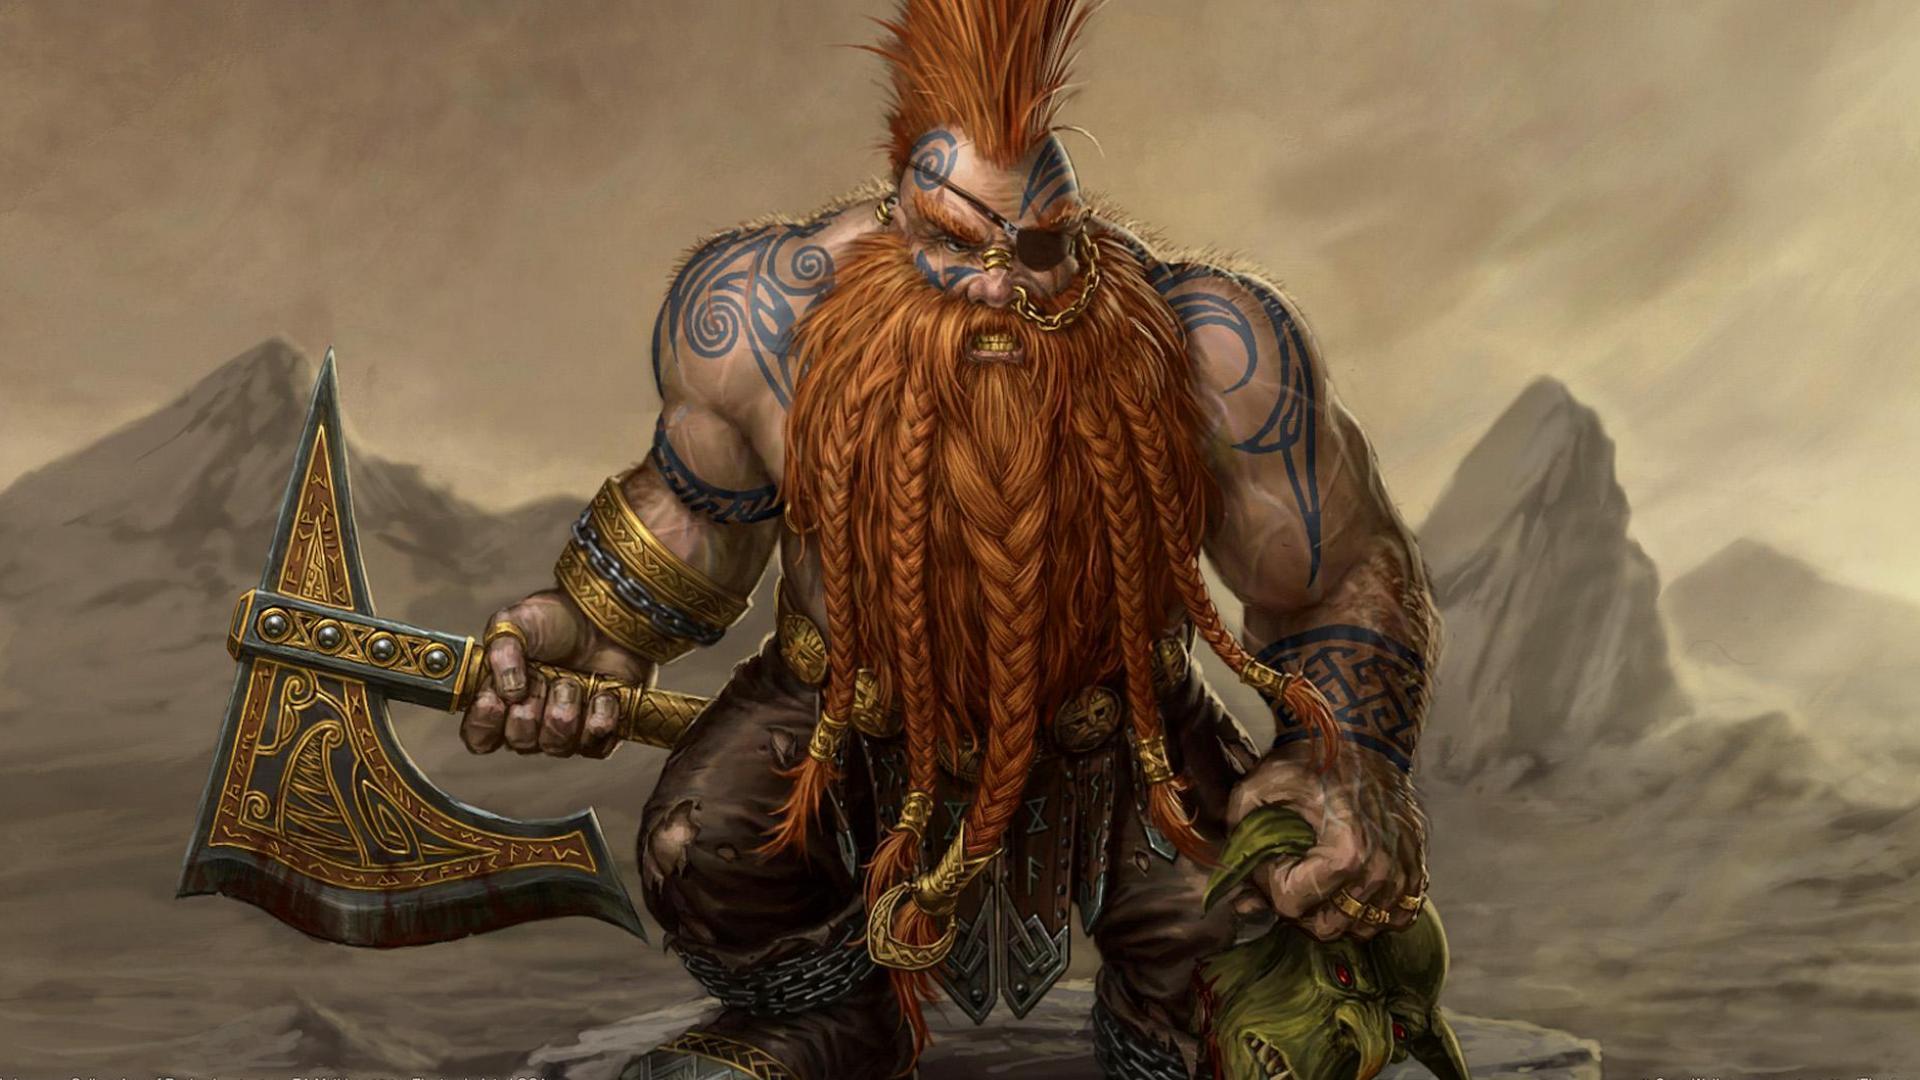 Dwarf Fb Axe Tattoo Slayer Slasher Fantasy Warrior Wallpaper